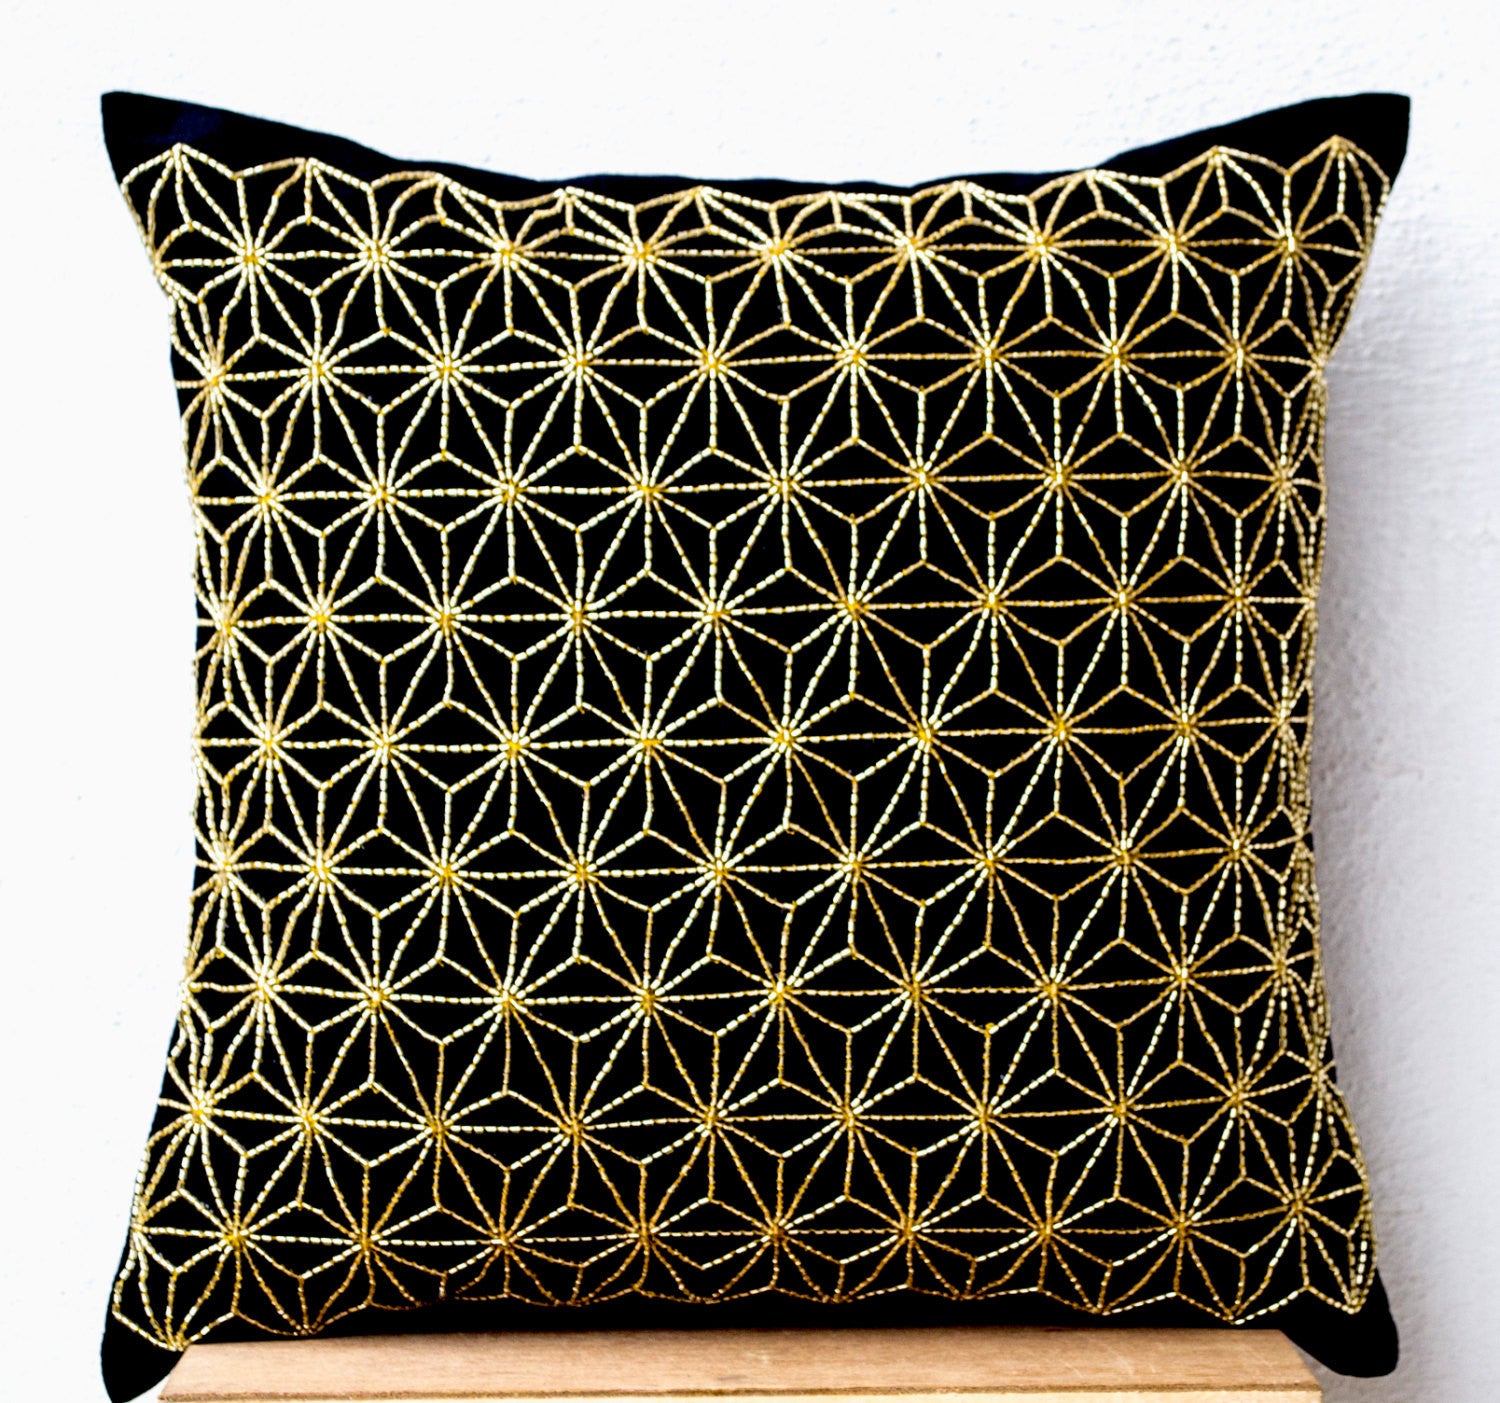 Handmade gold hemp leaf embroidery pillow case